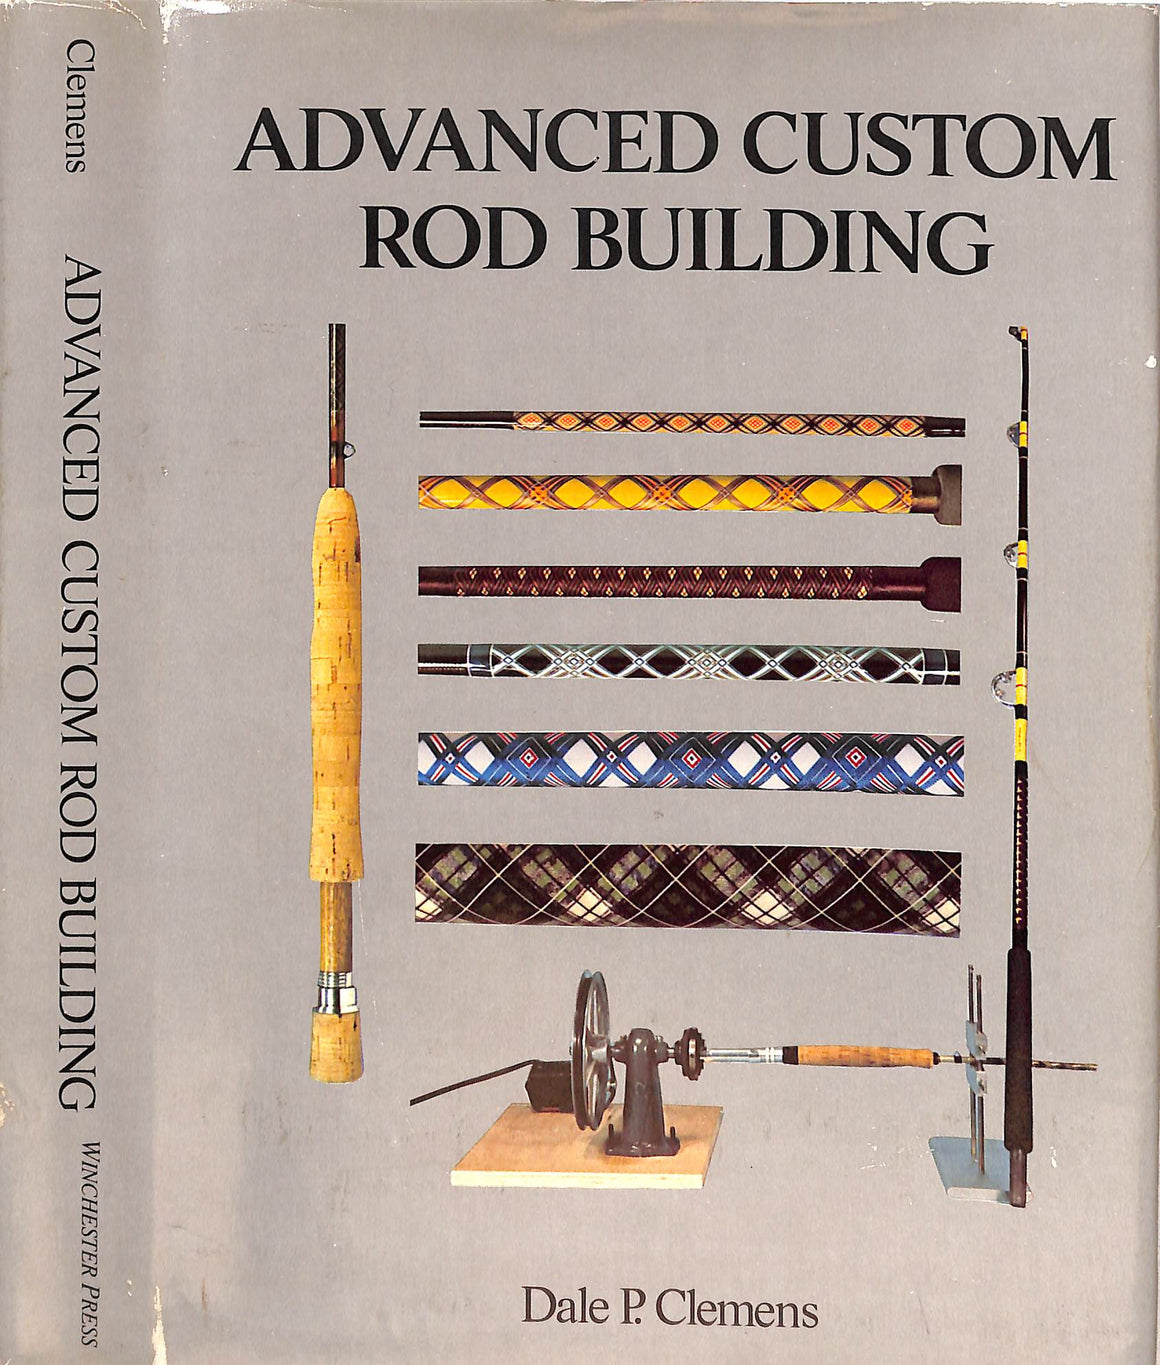 "Advanced Custom Rod Building" 1978 CLEMENS, Dale P.